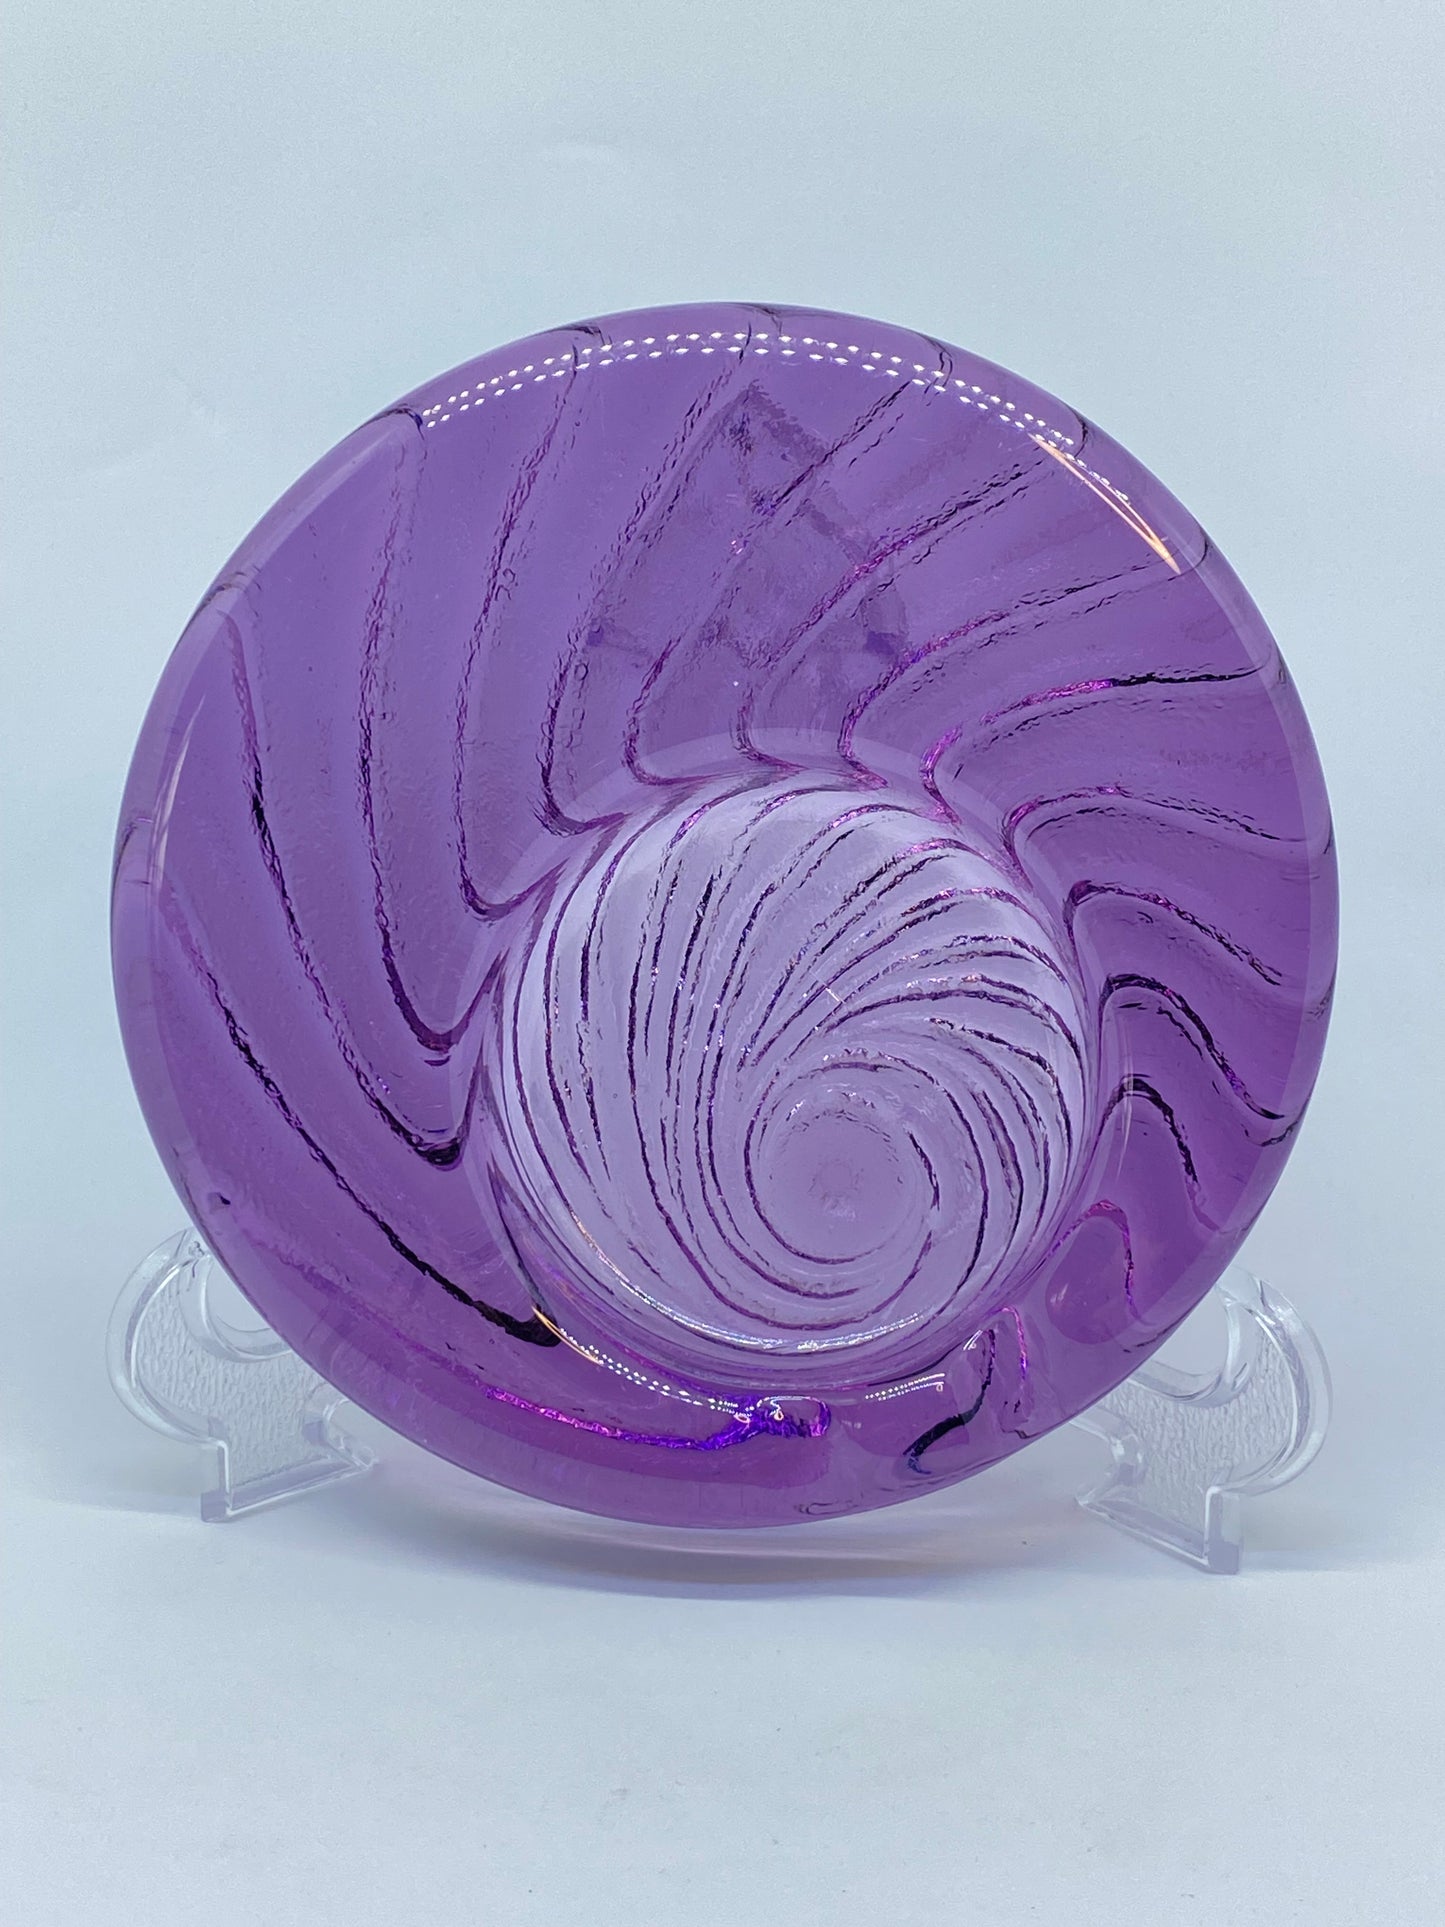 MCM Purple glass ashtray / bowl - heavy